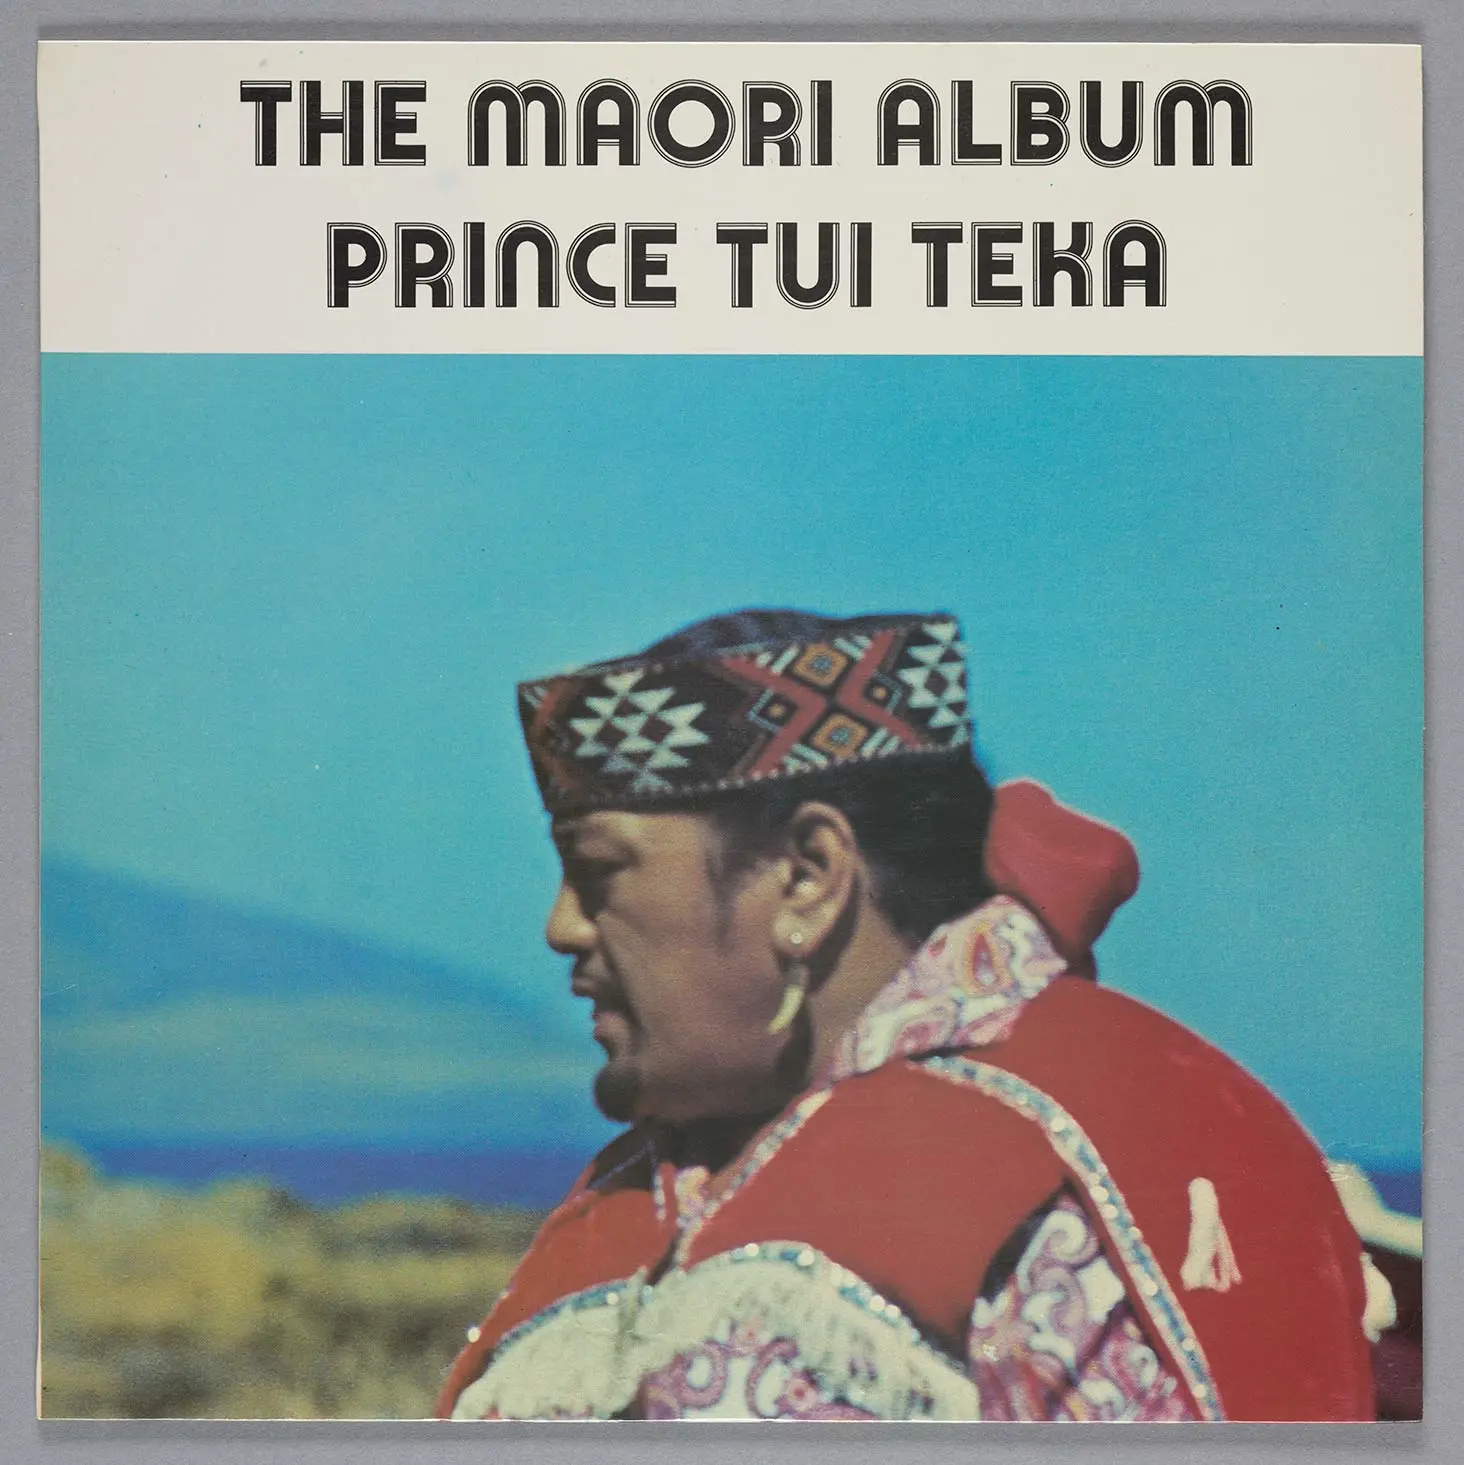 Album cover titled ‘The Maori Album Prince Tui Teka’, showing a photo of Tumanako Teka (Prince Tui Teka) wearing a headband and standing against a blue sky.